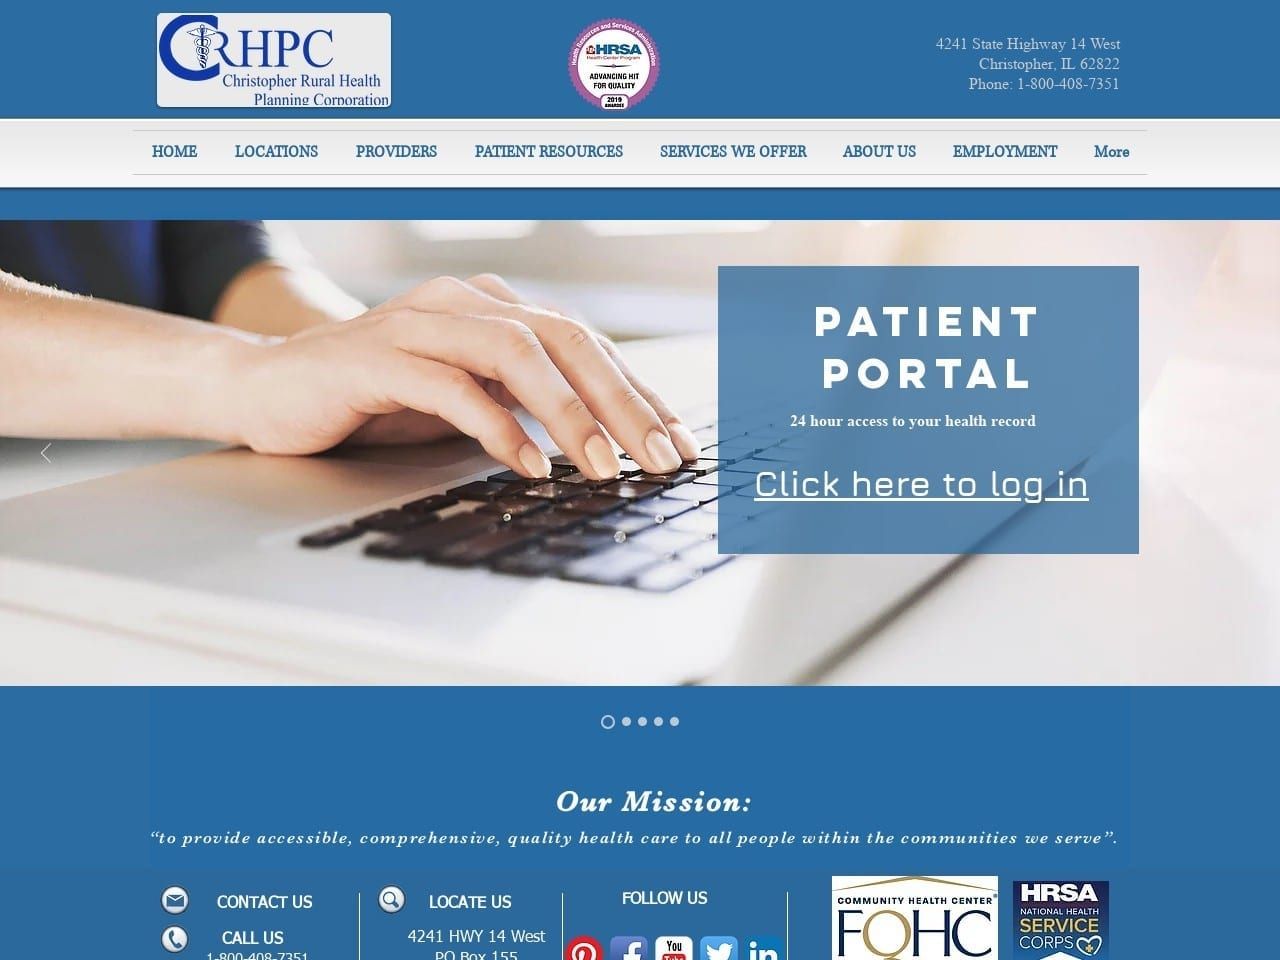 Zeigler Community Health Center Website Screenshot from crhpc.org